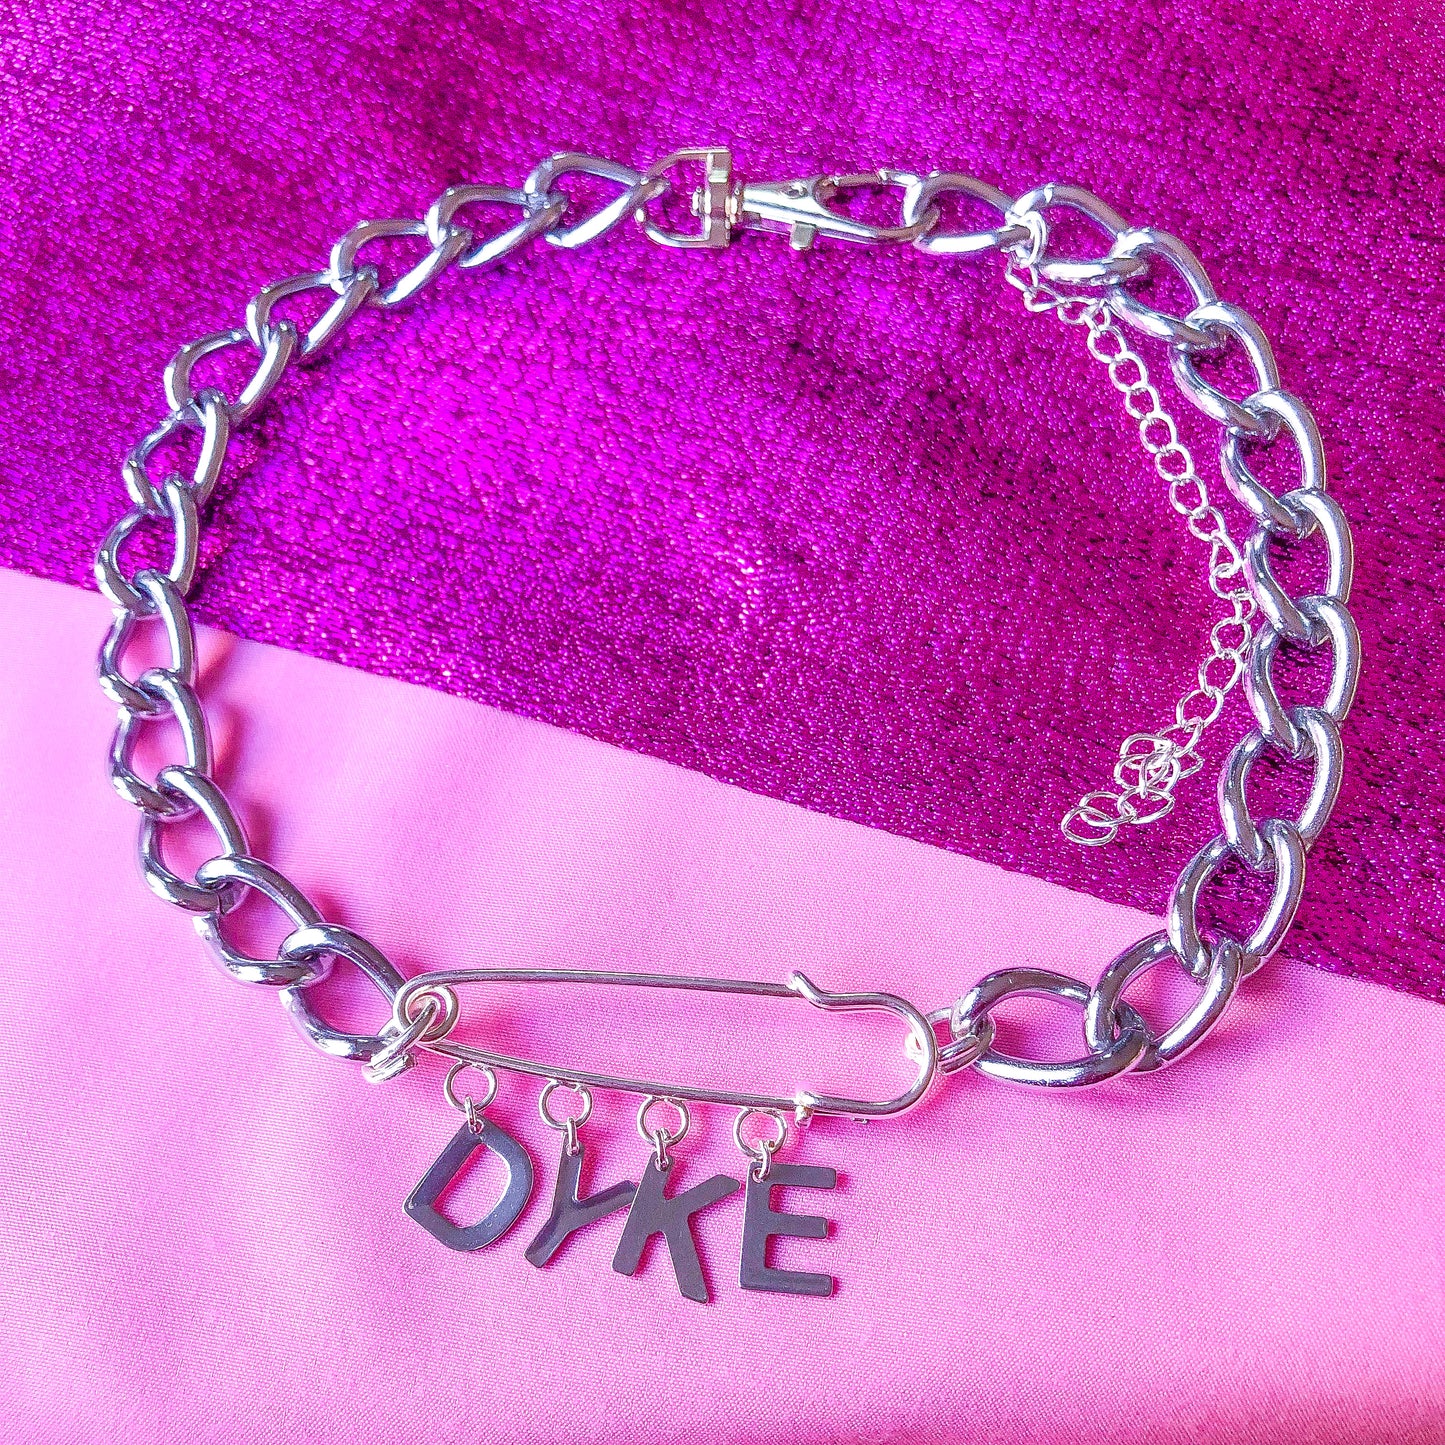 Dyke kilt pin chunky chain choker necklace